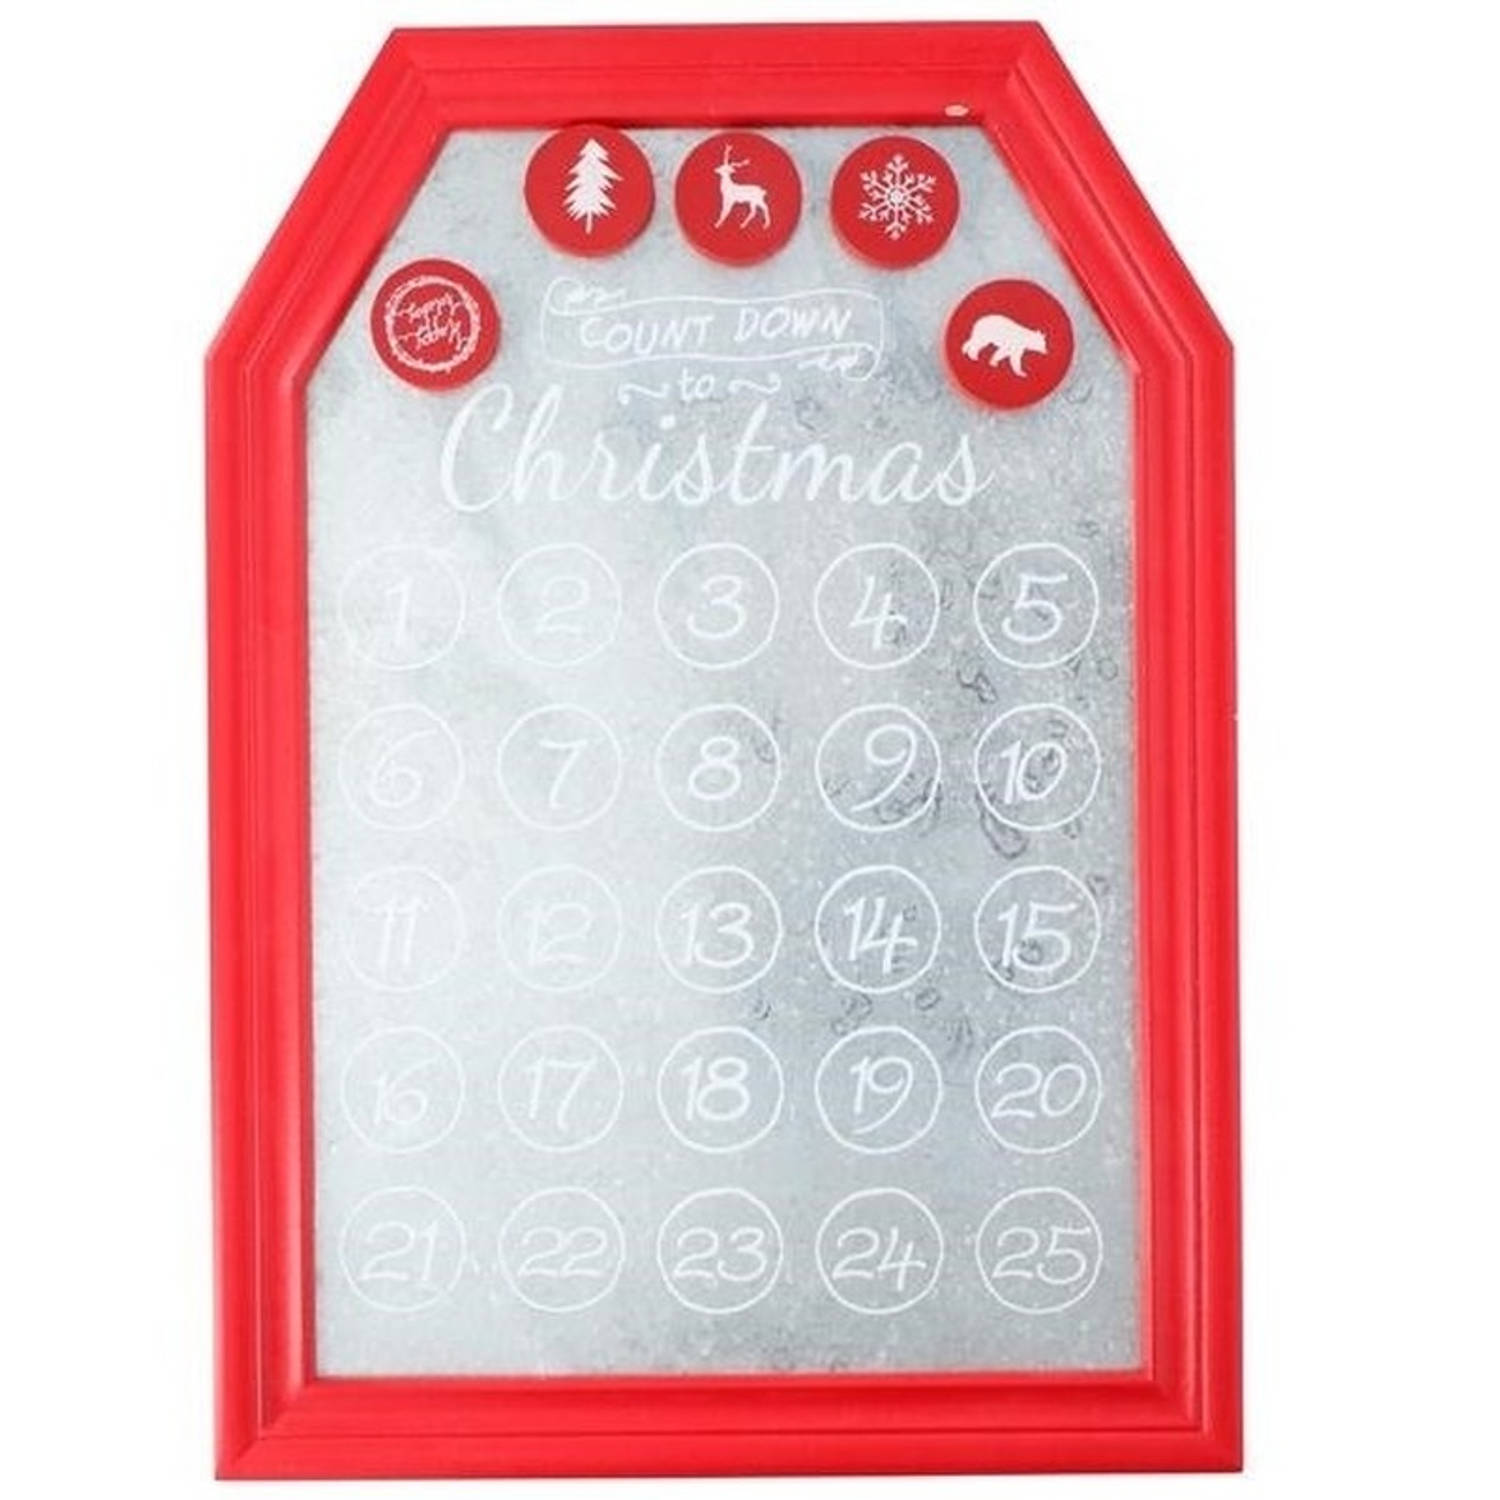 Kerst Decoratie Planbord-Magneetbord Rood 31 X 45 Cm Kerst Adventskalenders